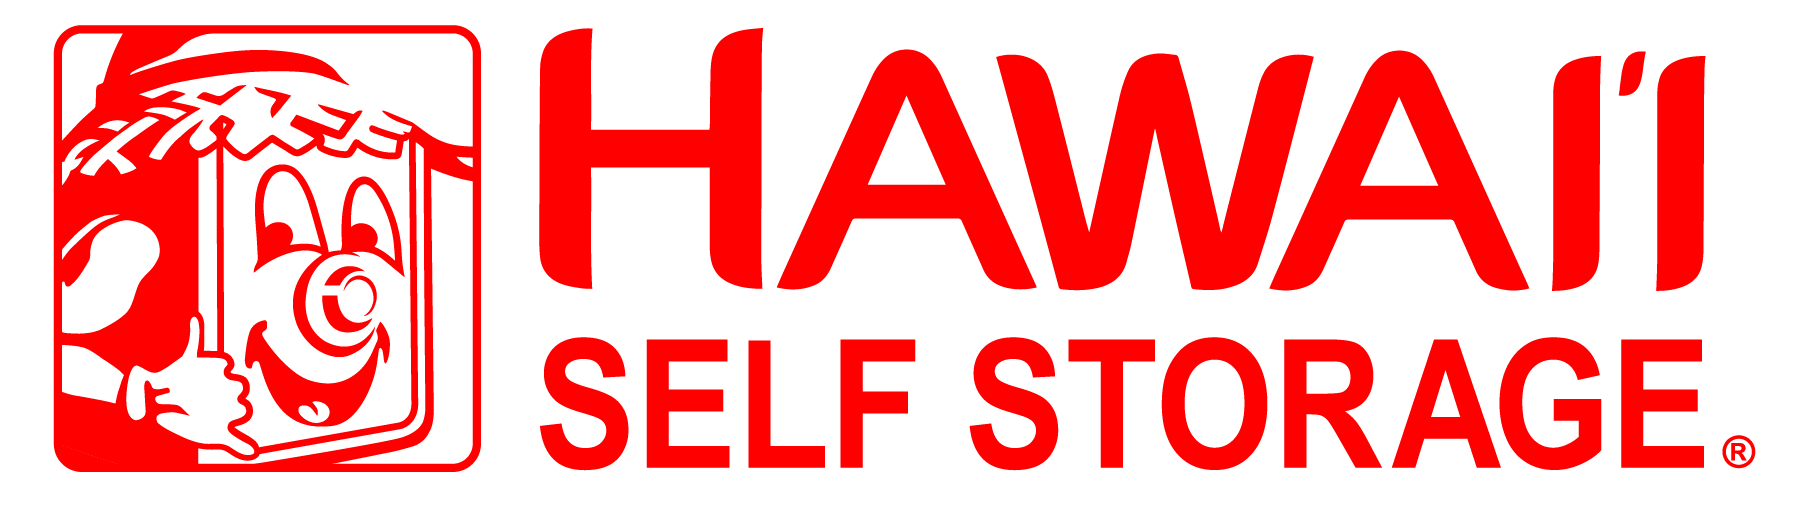 hawaii-self-storage-logored-01.png